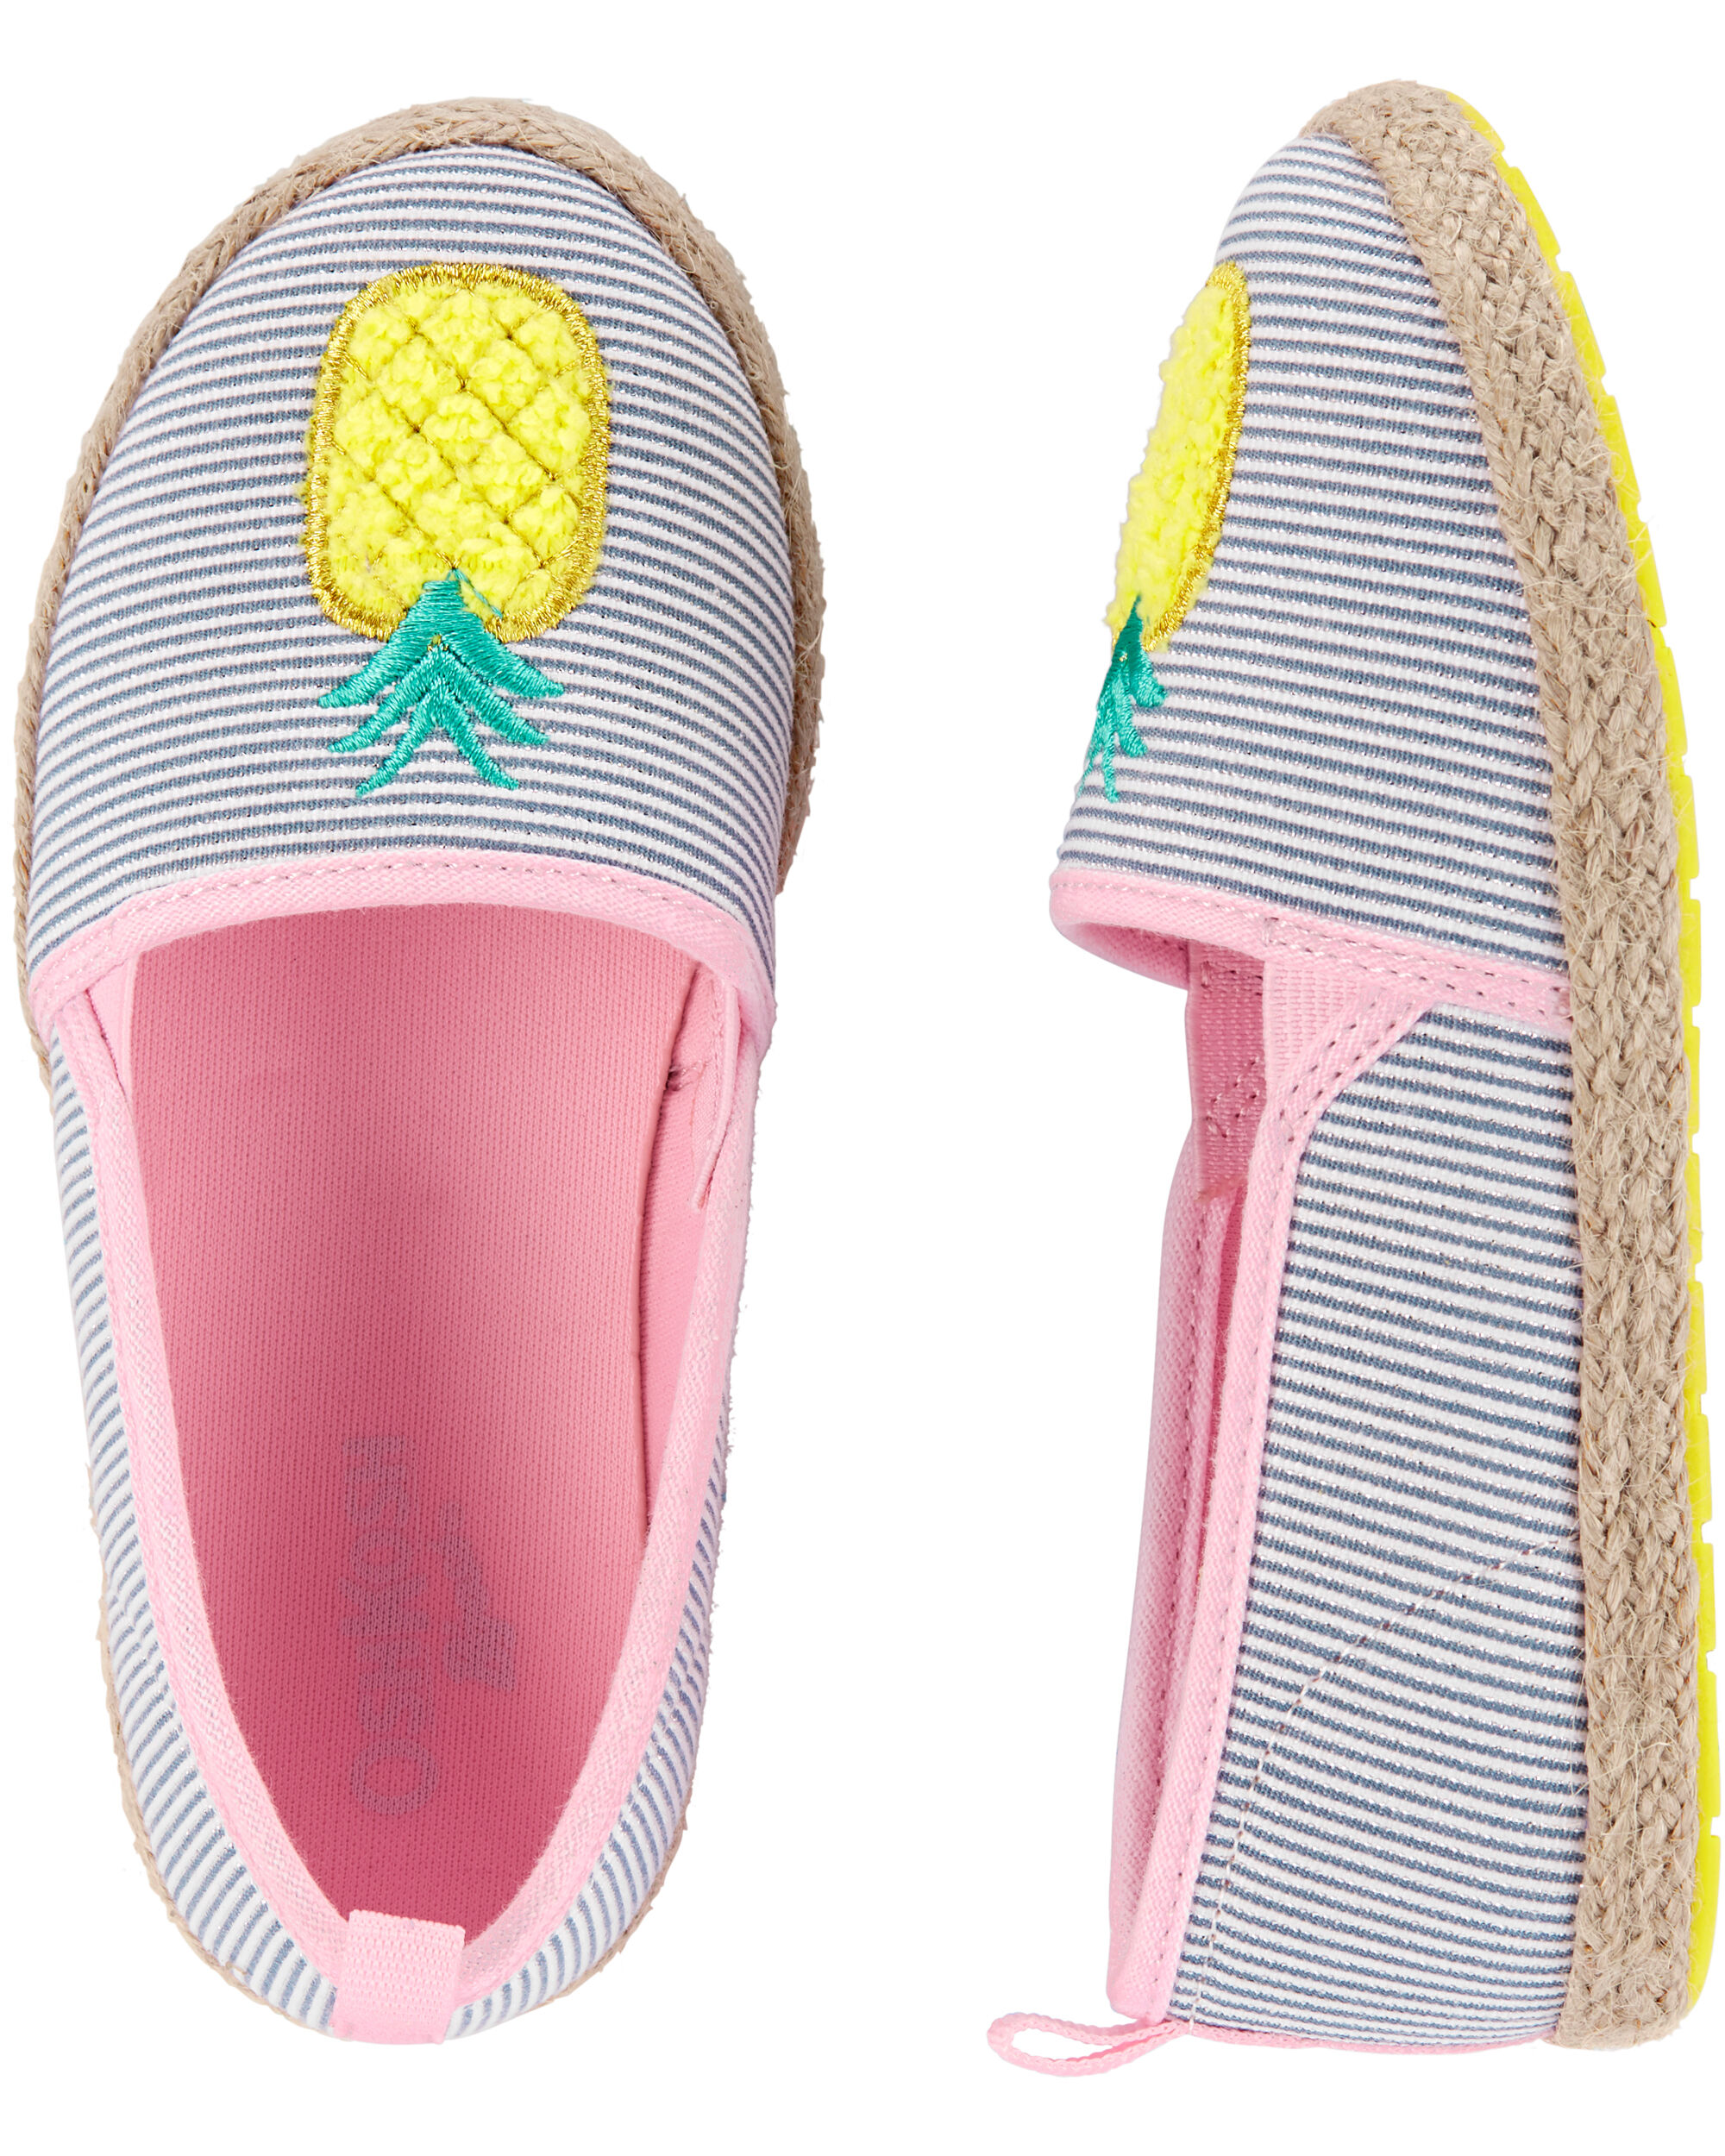 pineapple slip on shoes